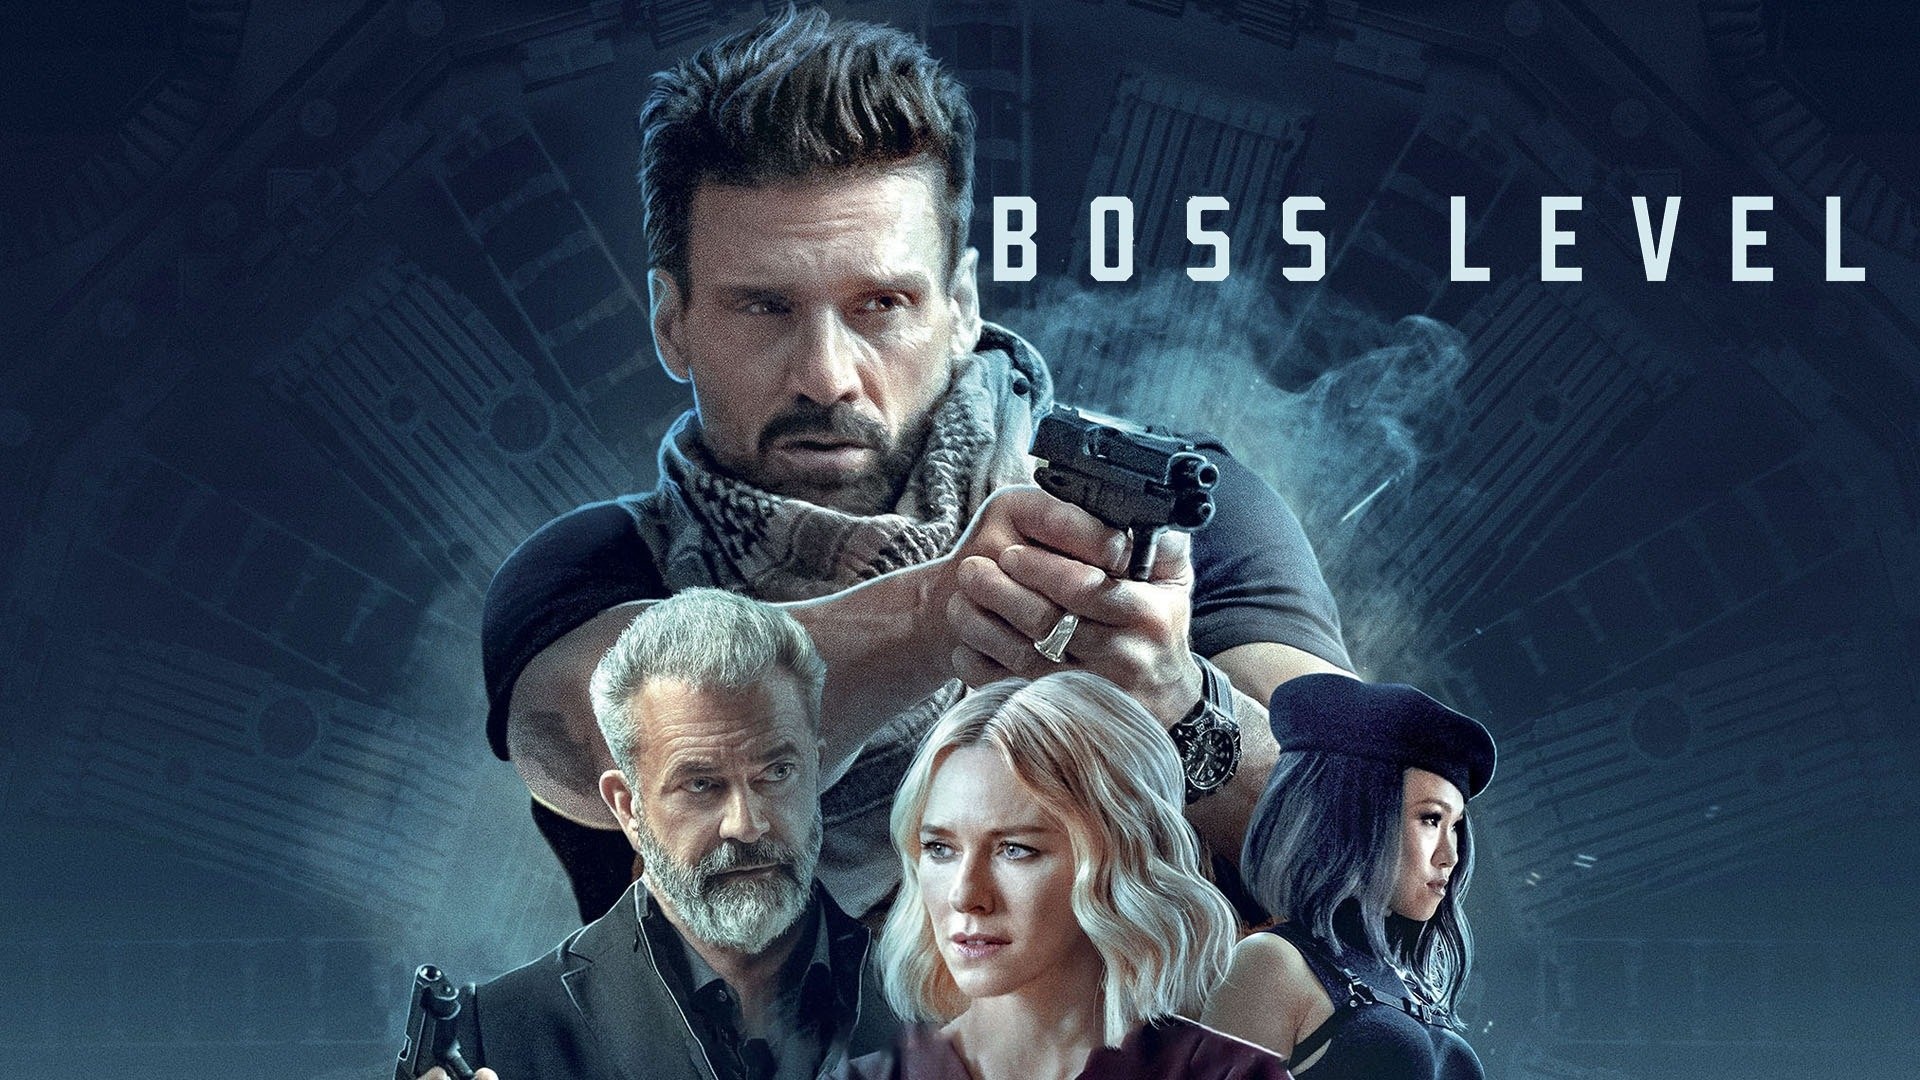 Boss Level, Online movie, Watch full movie, Action-packed, 1920x1080 Full HD Desktop